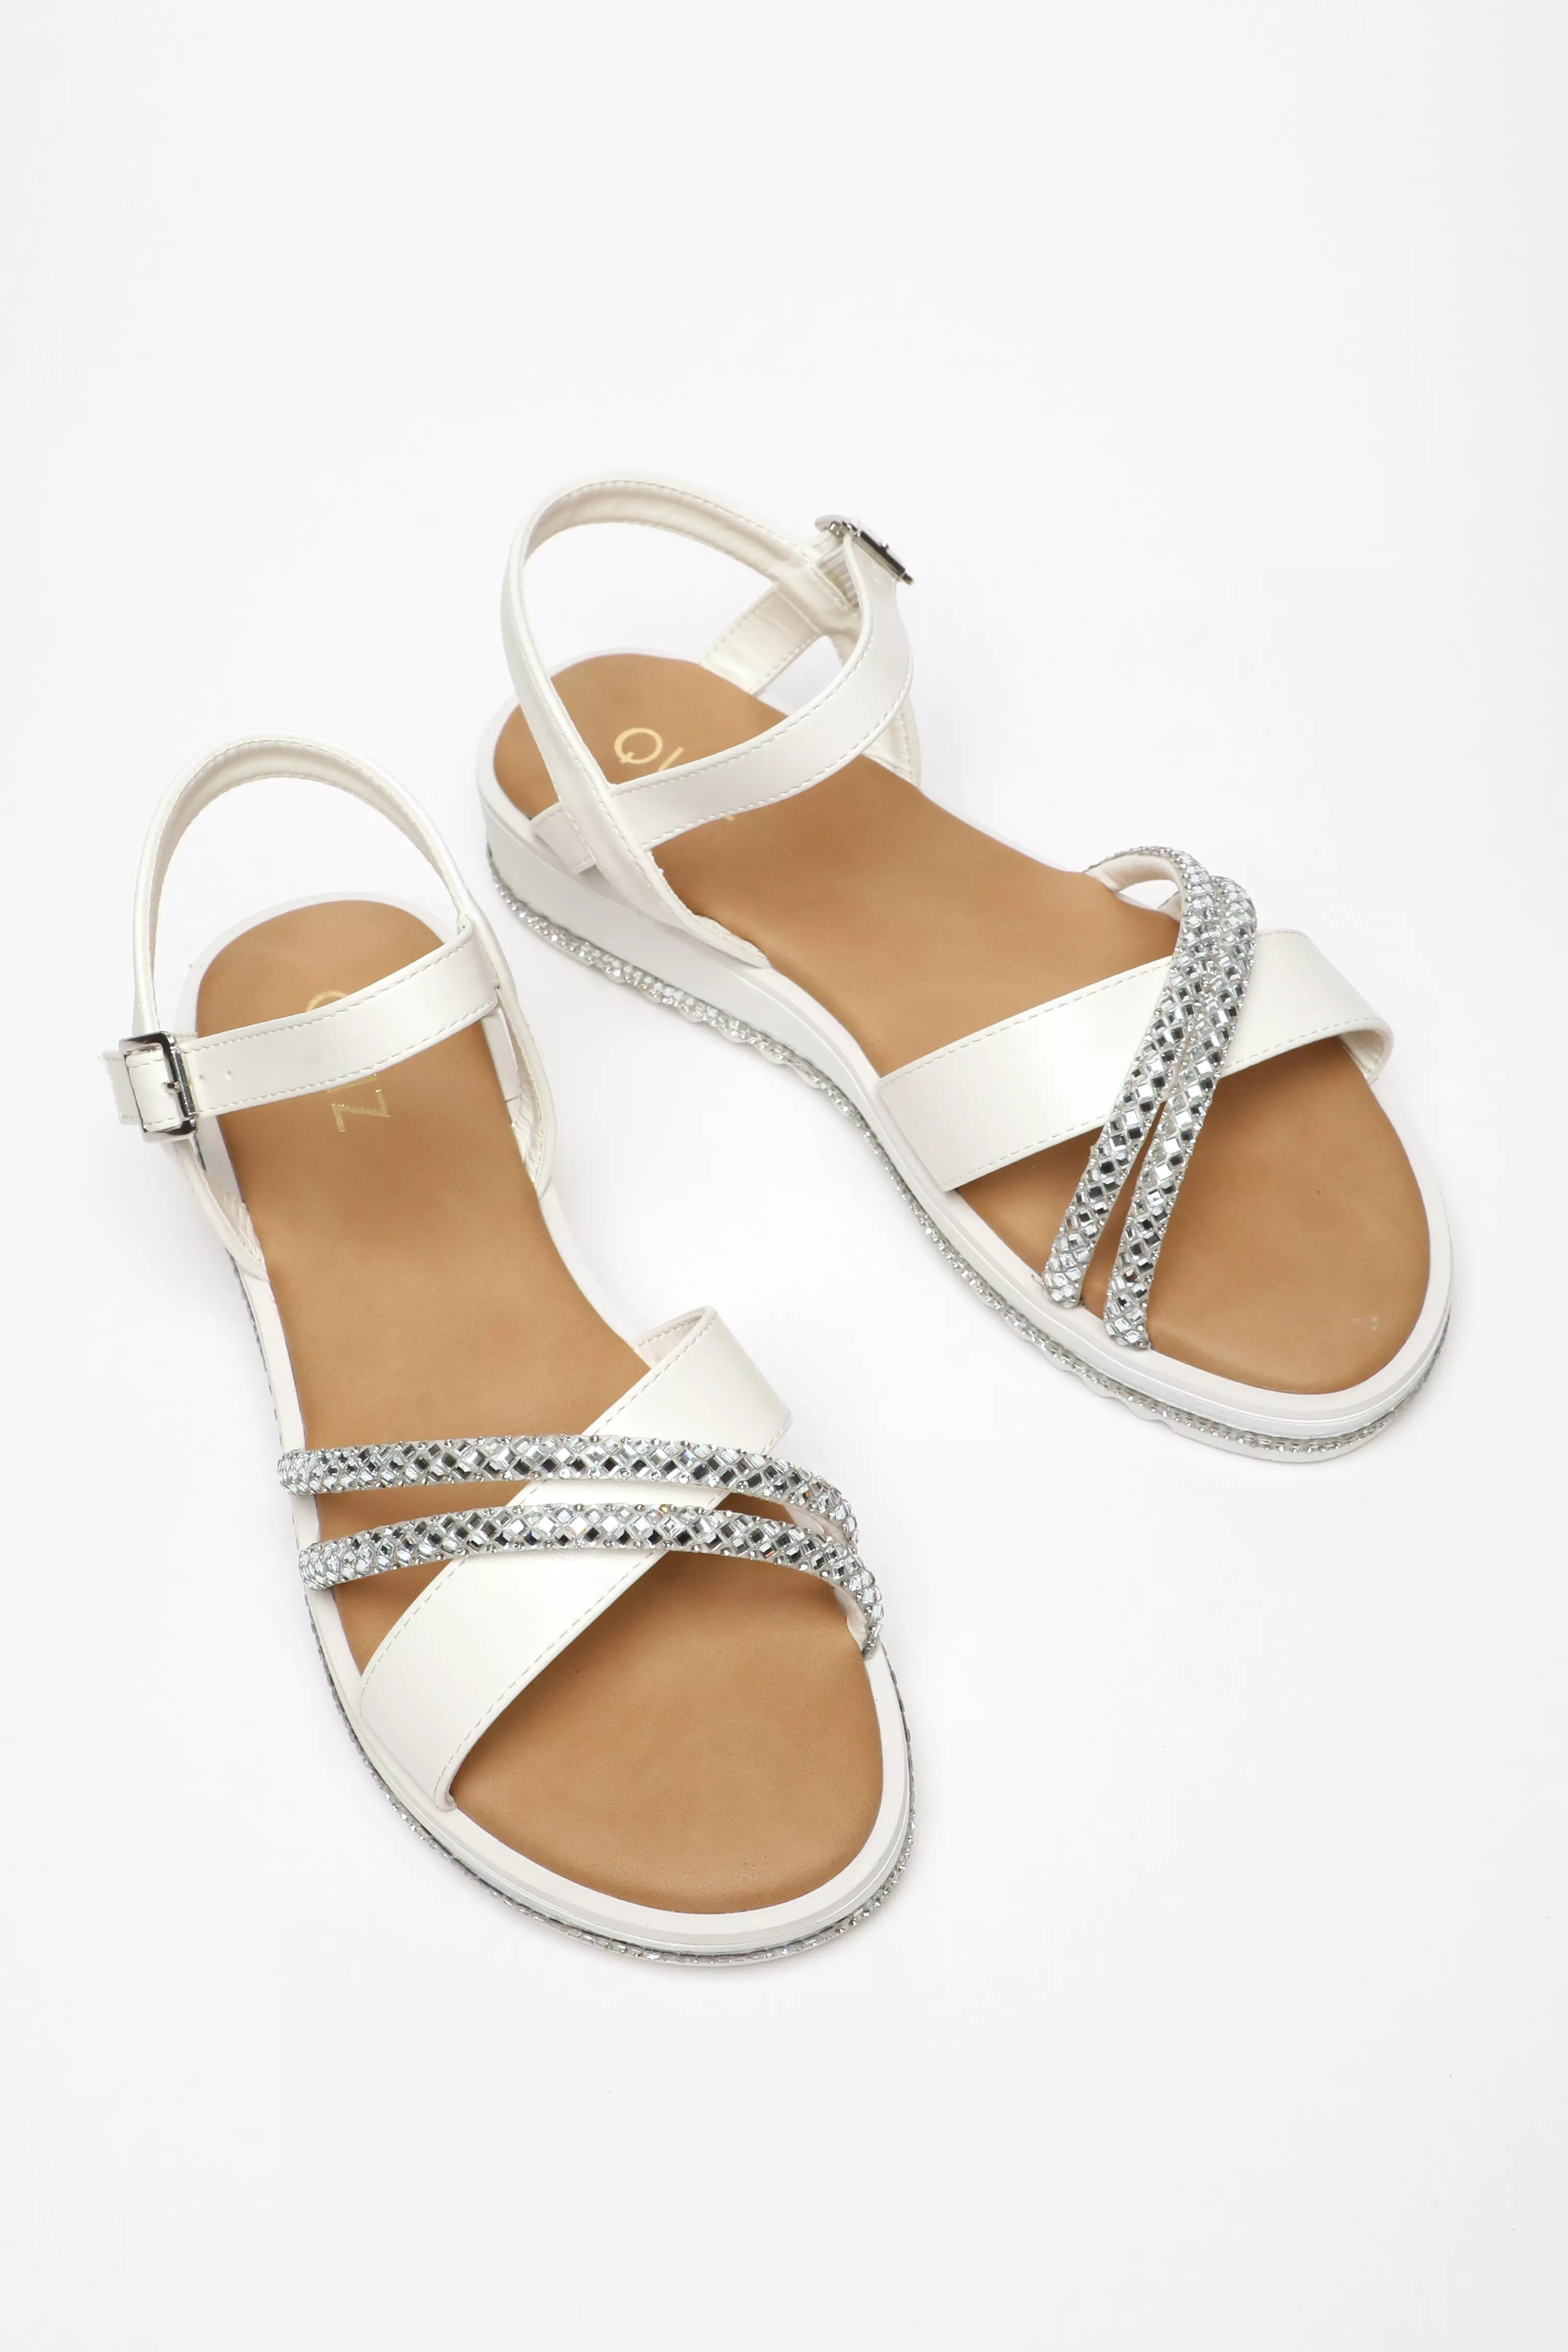 White Faux Leather Diamante Cross Strap Sandals